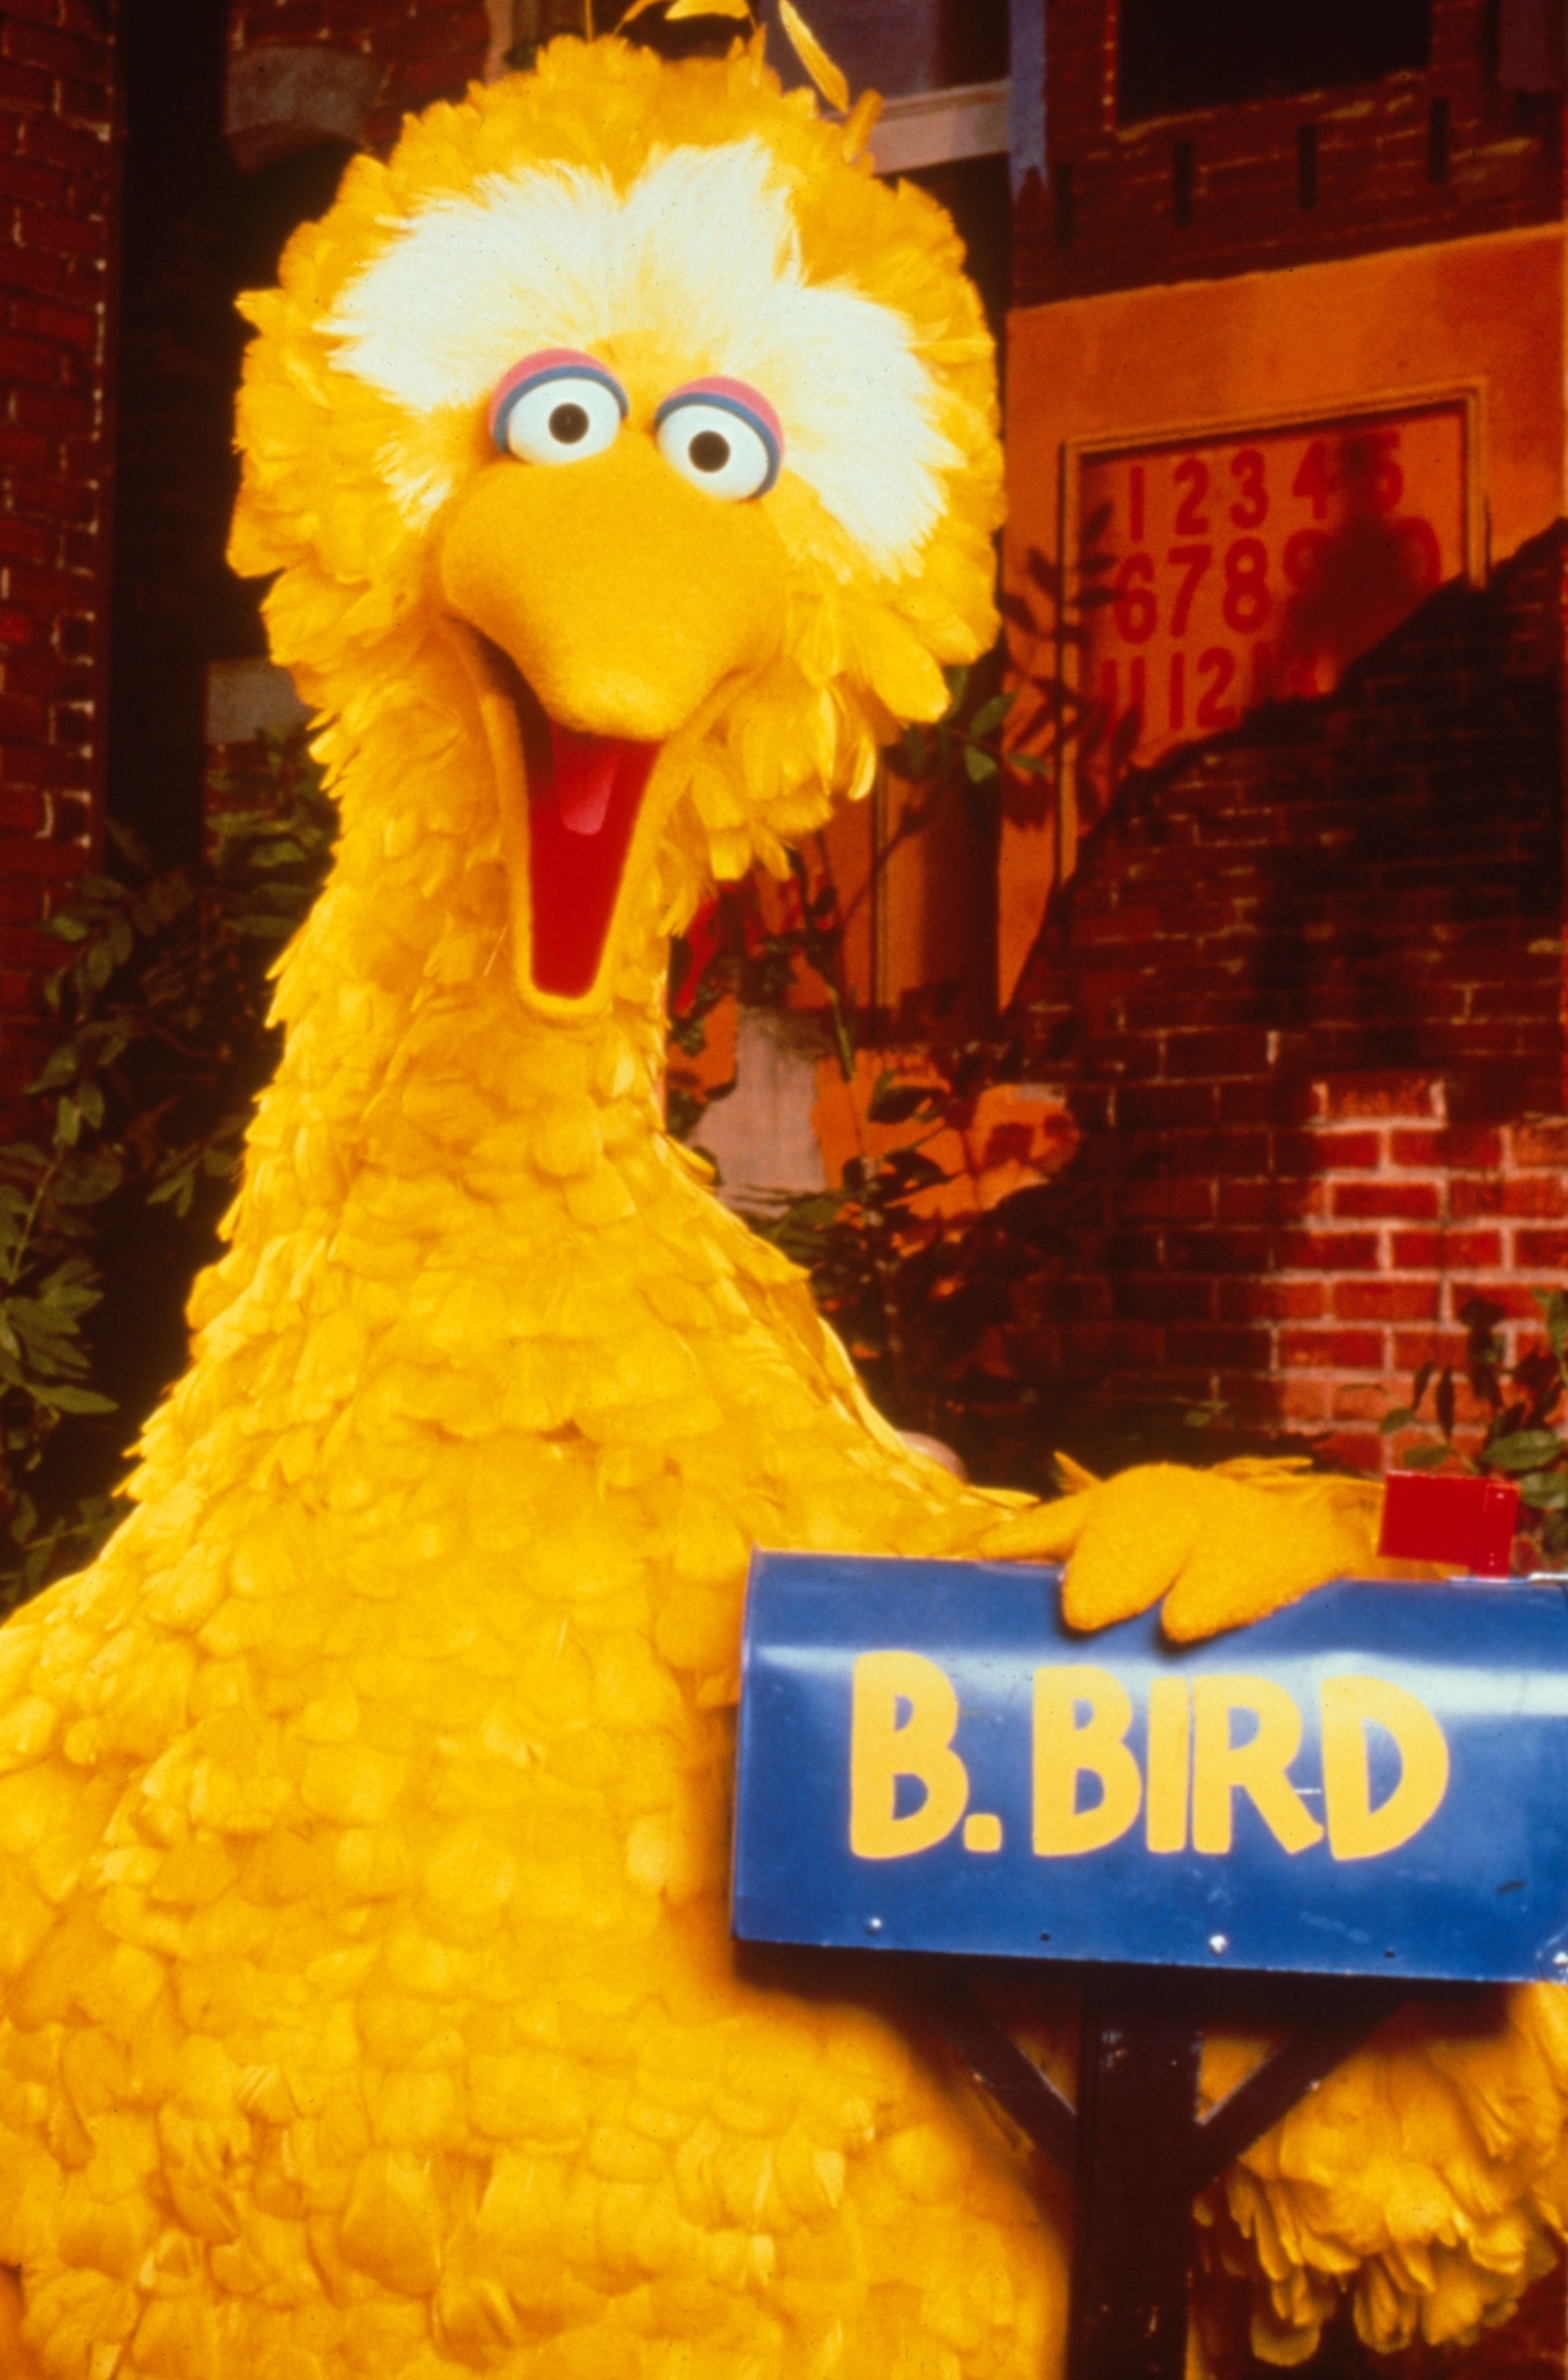 Big Bird posing with his sesame street mailbox